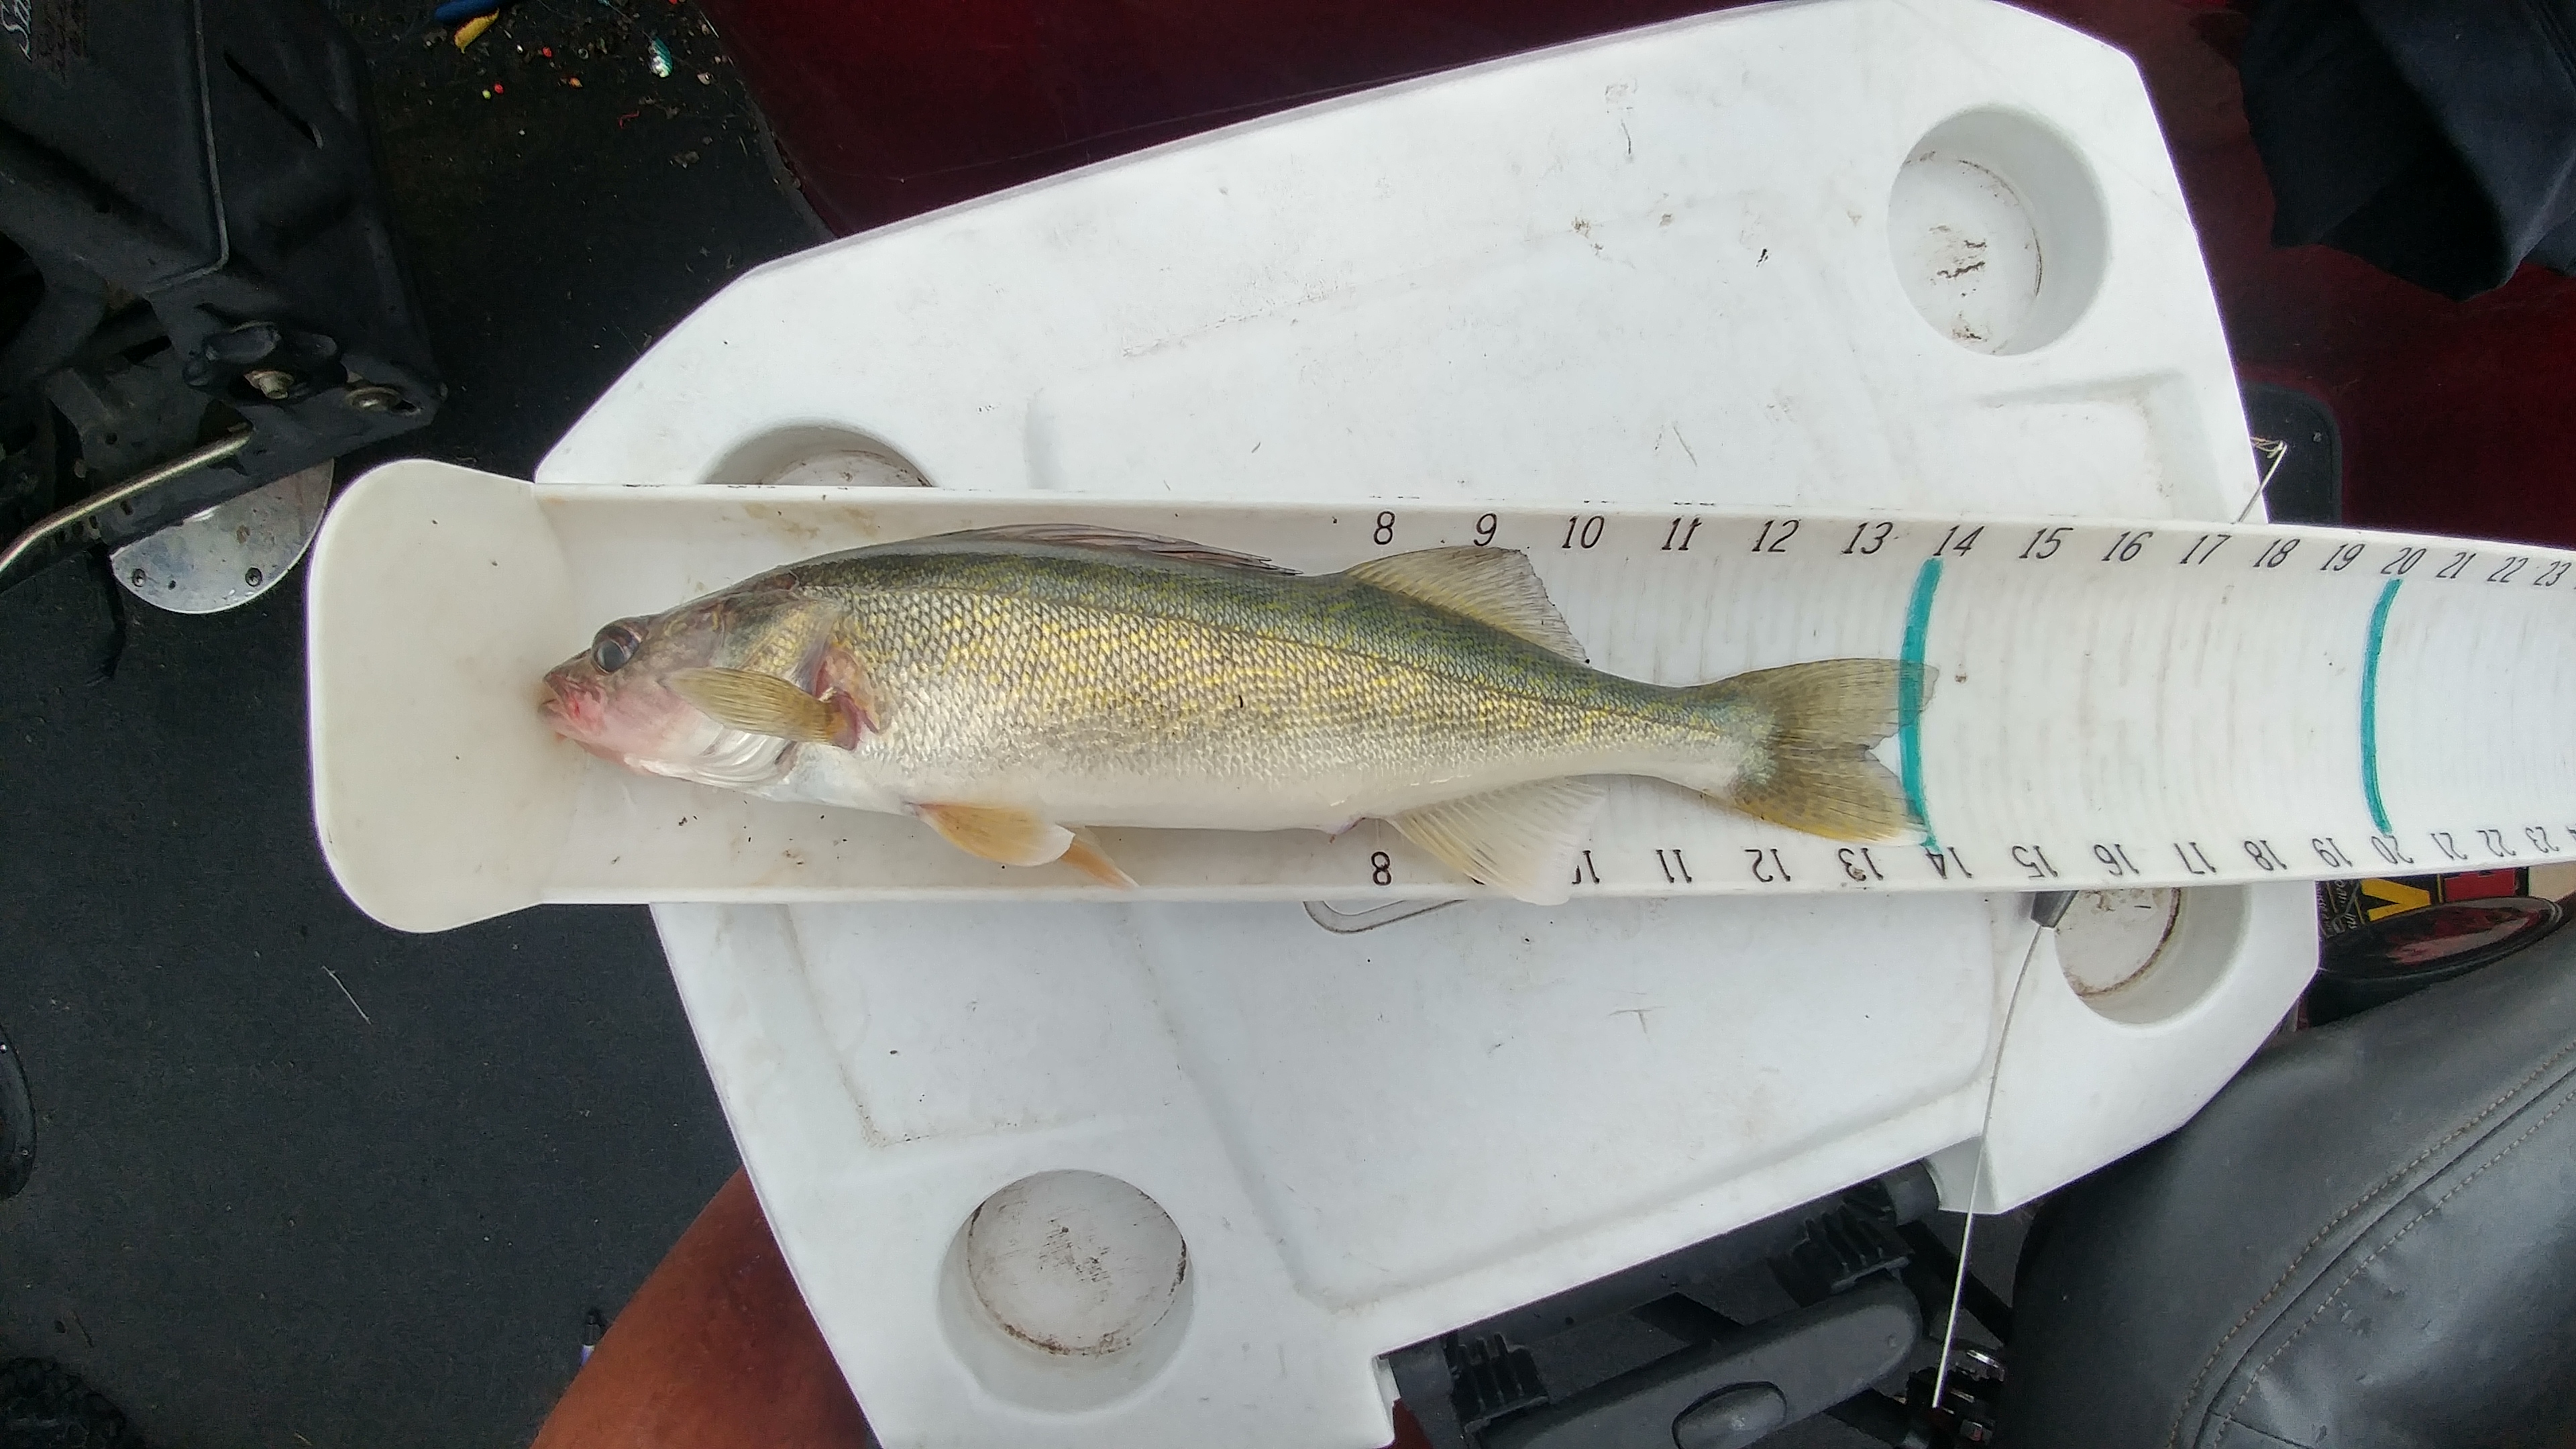 20170717_072827_HDR Devils Lake Fishing Report